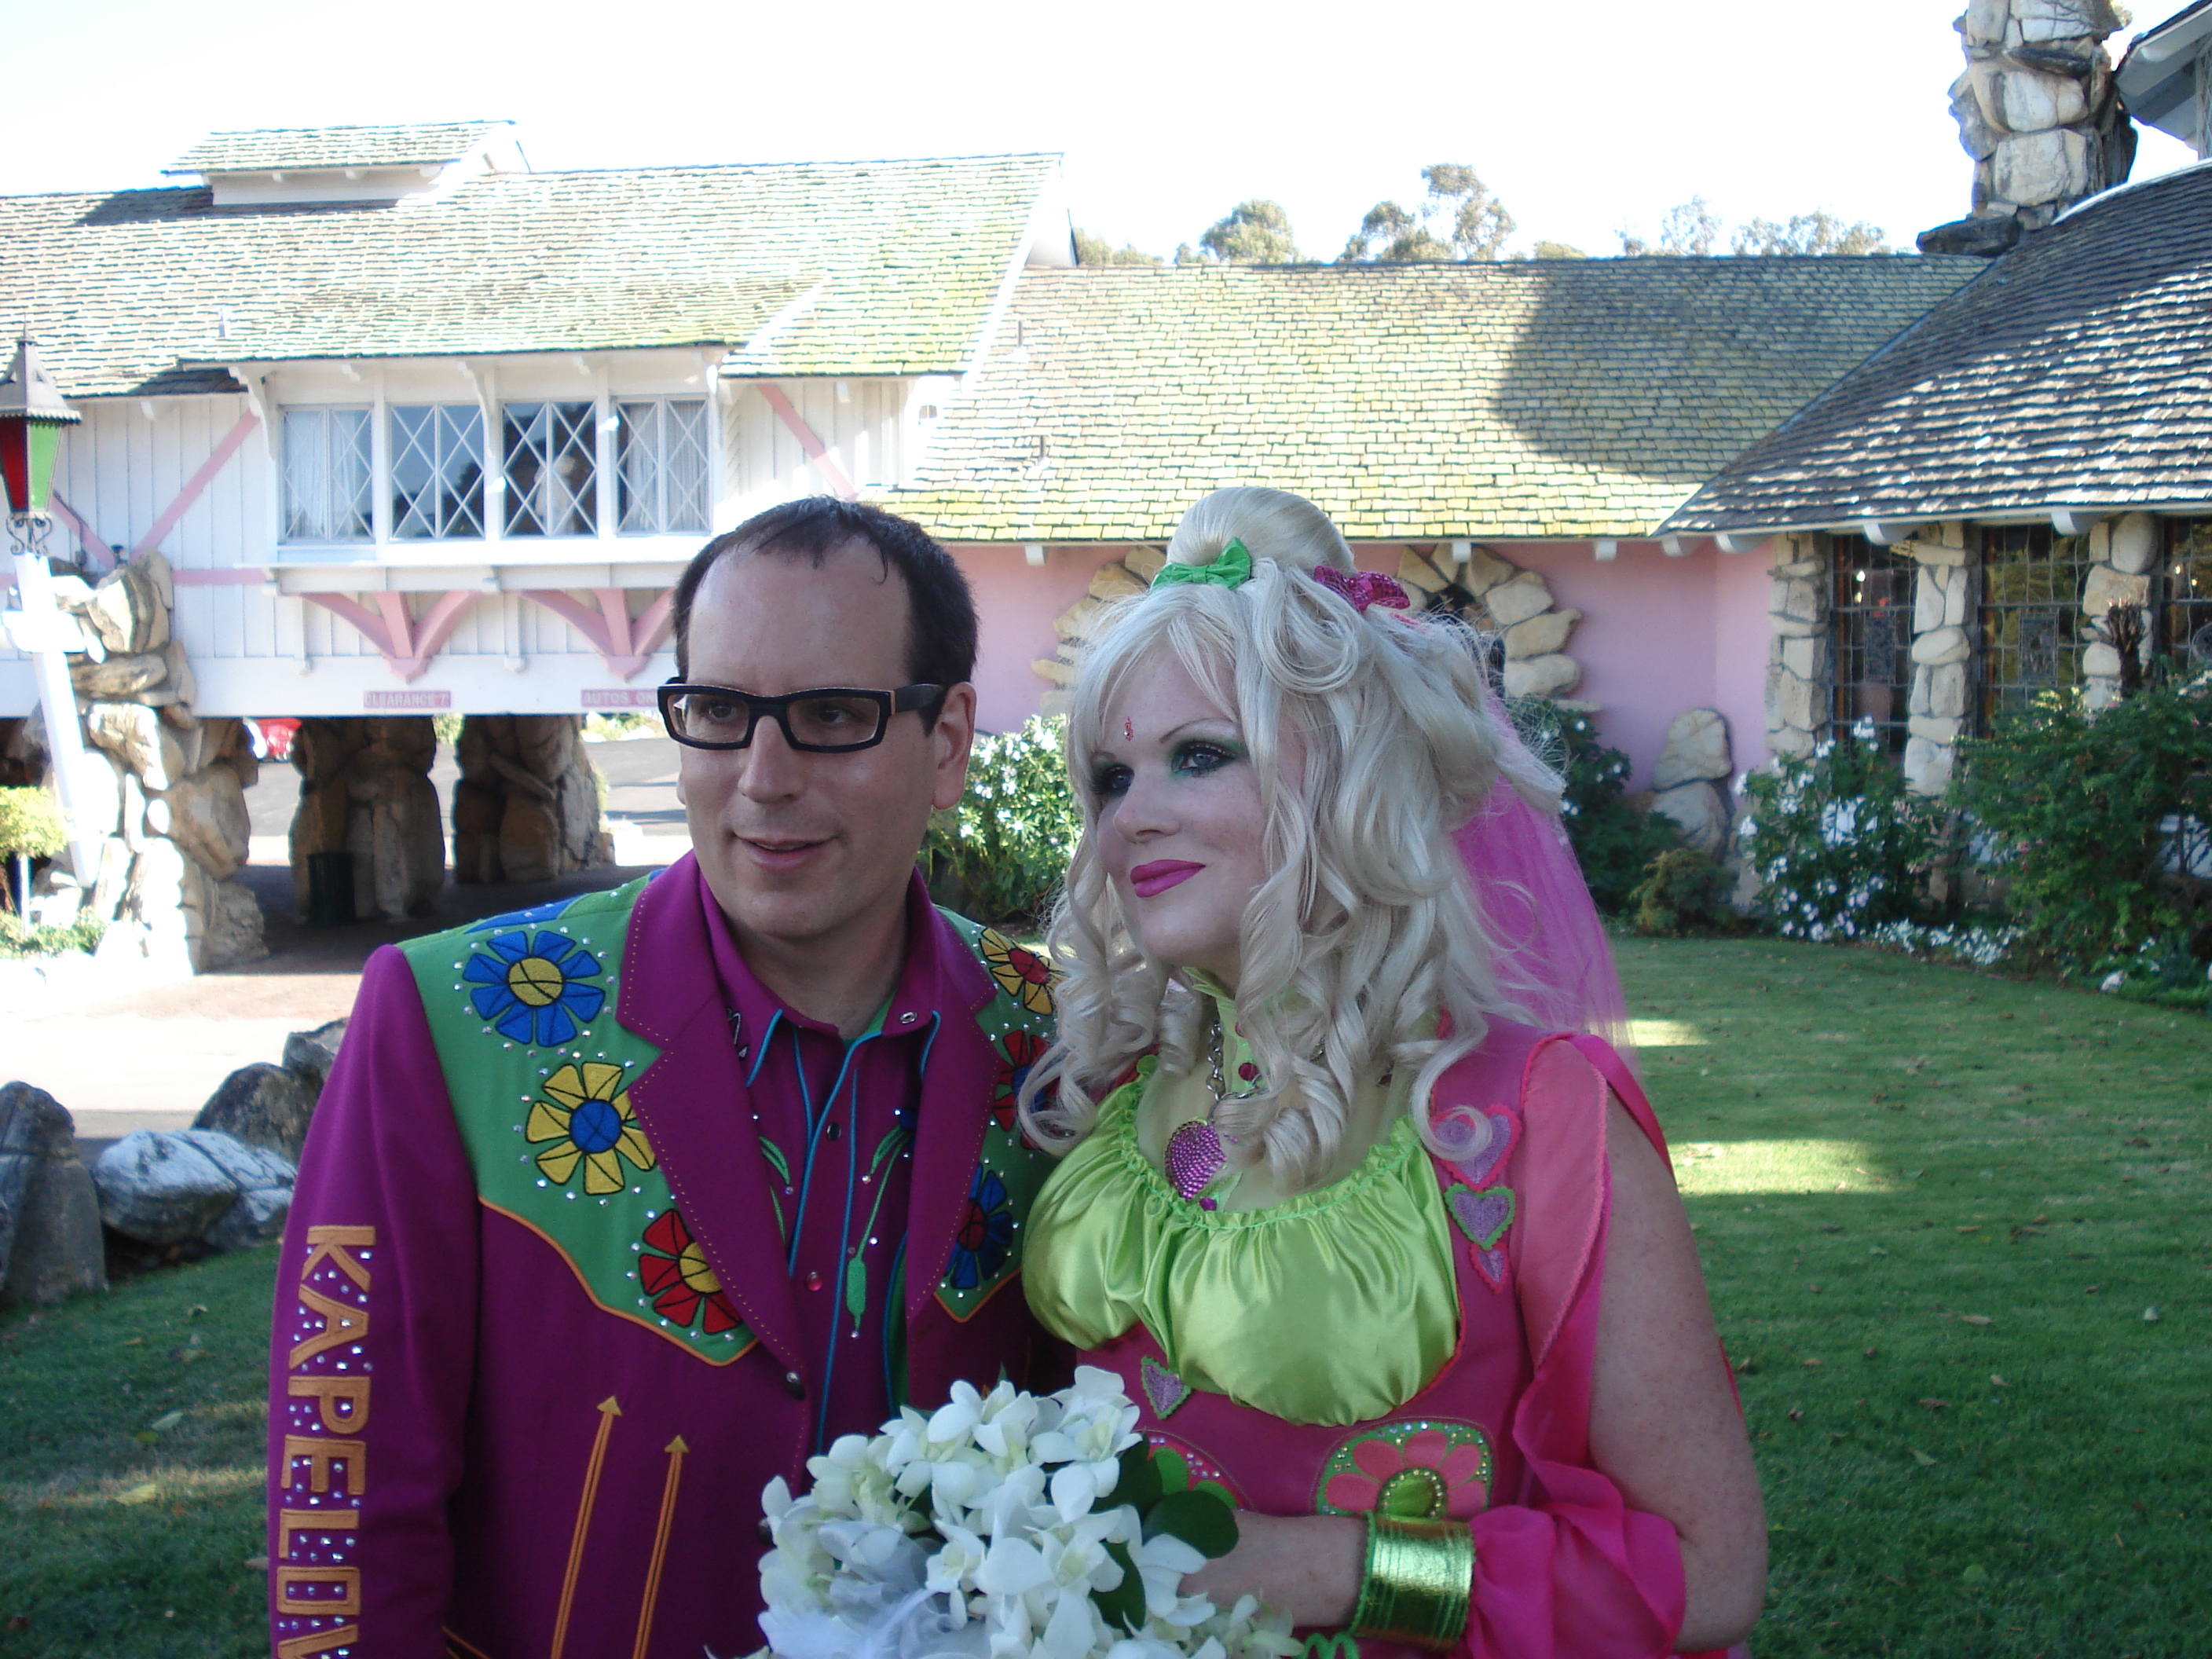 Giddle Partridge & Husband, Daniel Kapelovitz. Wedding day, 09/13/09.